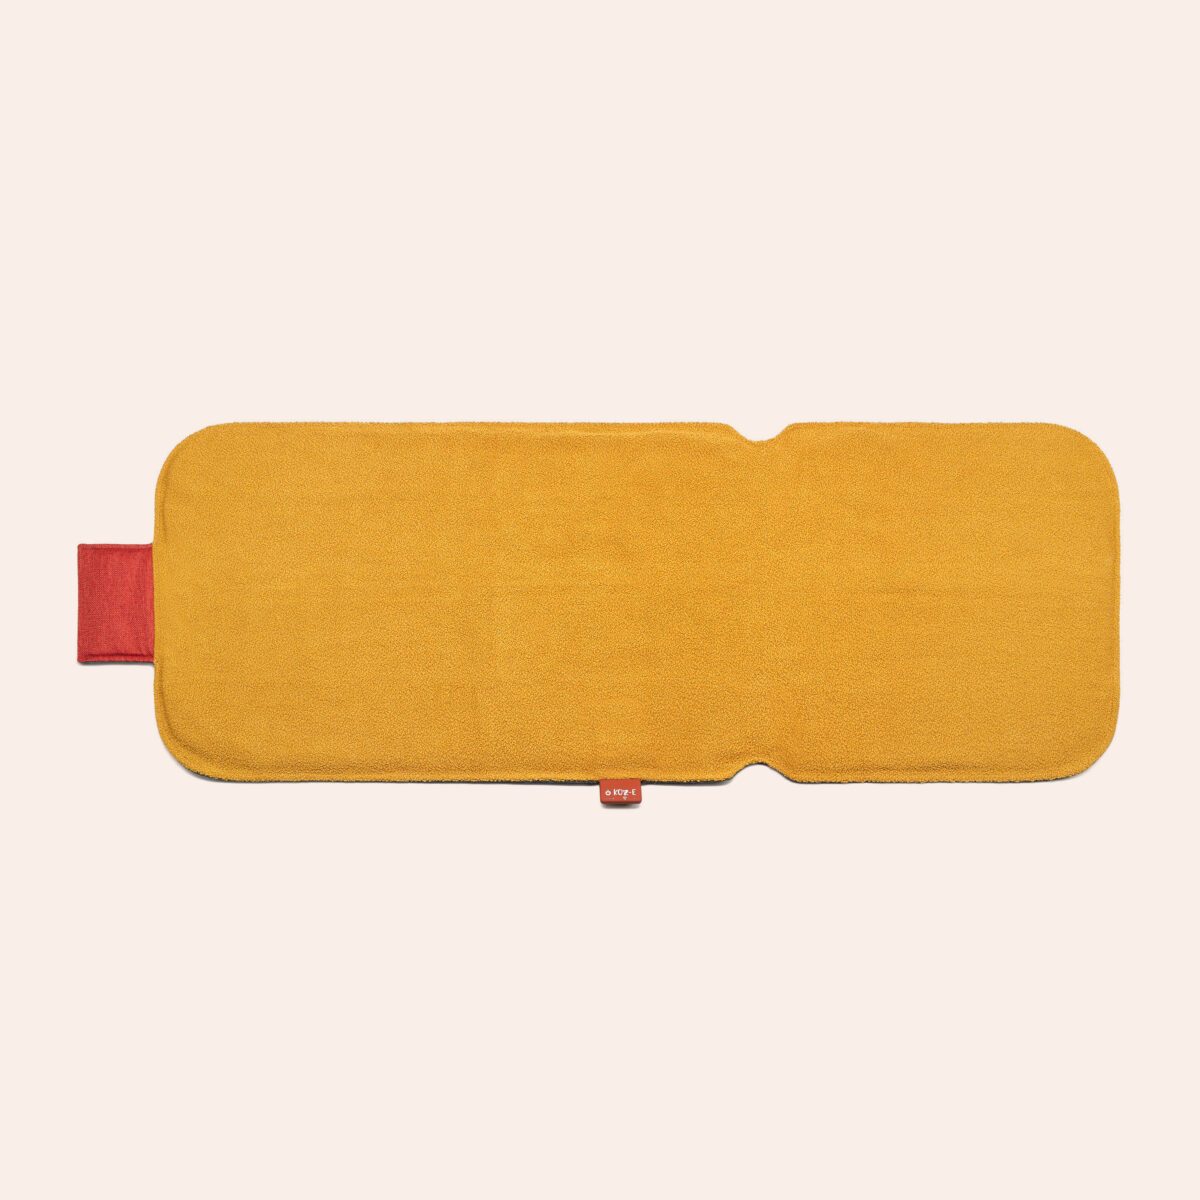 draadloze-stoelverwarmer-teddy- geel-46.5-x-139-cm